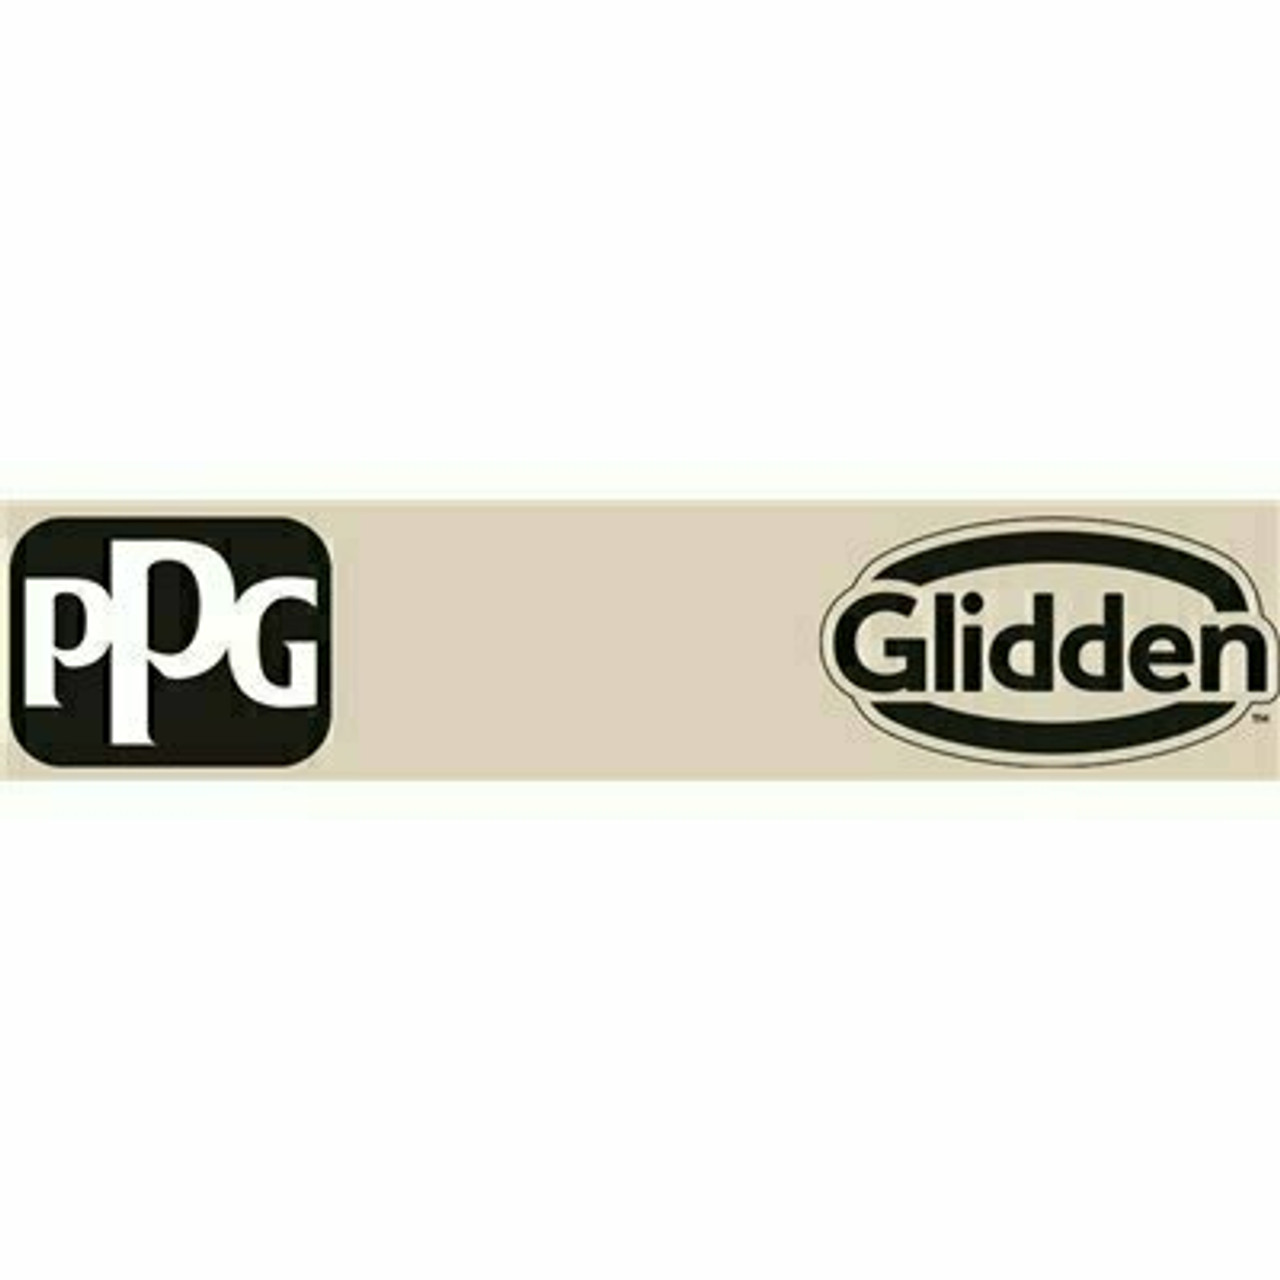 Glidden Essentials 1 Gal. #Ppg1024-3 Crushed Silk Flat Interior Paint